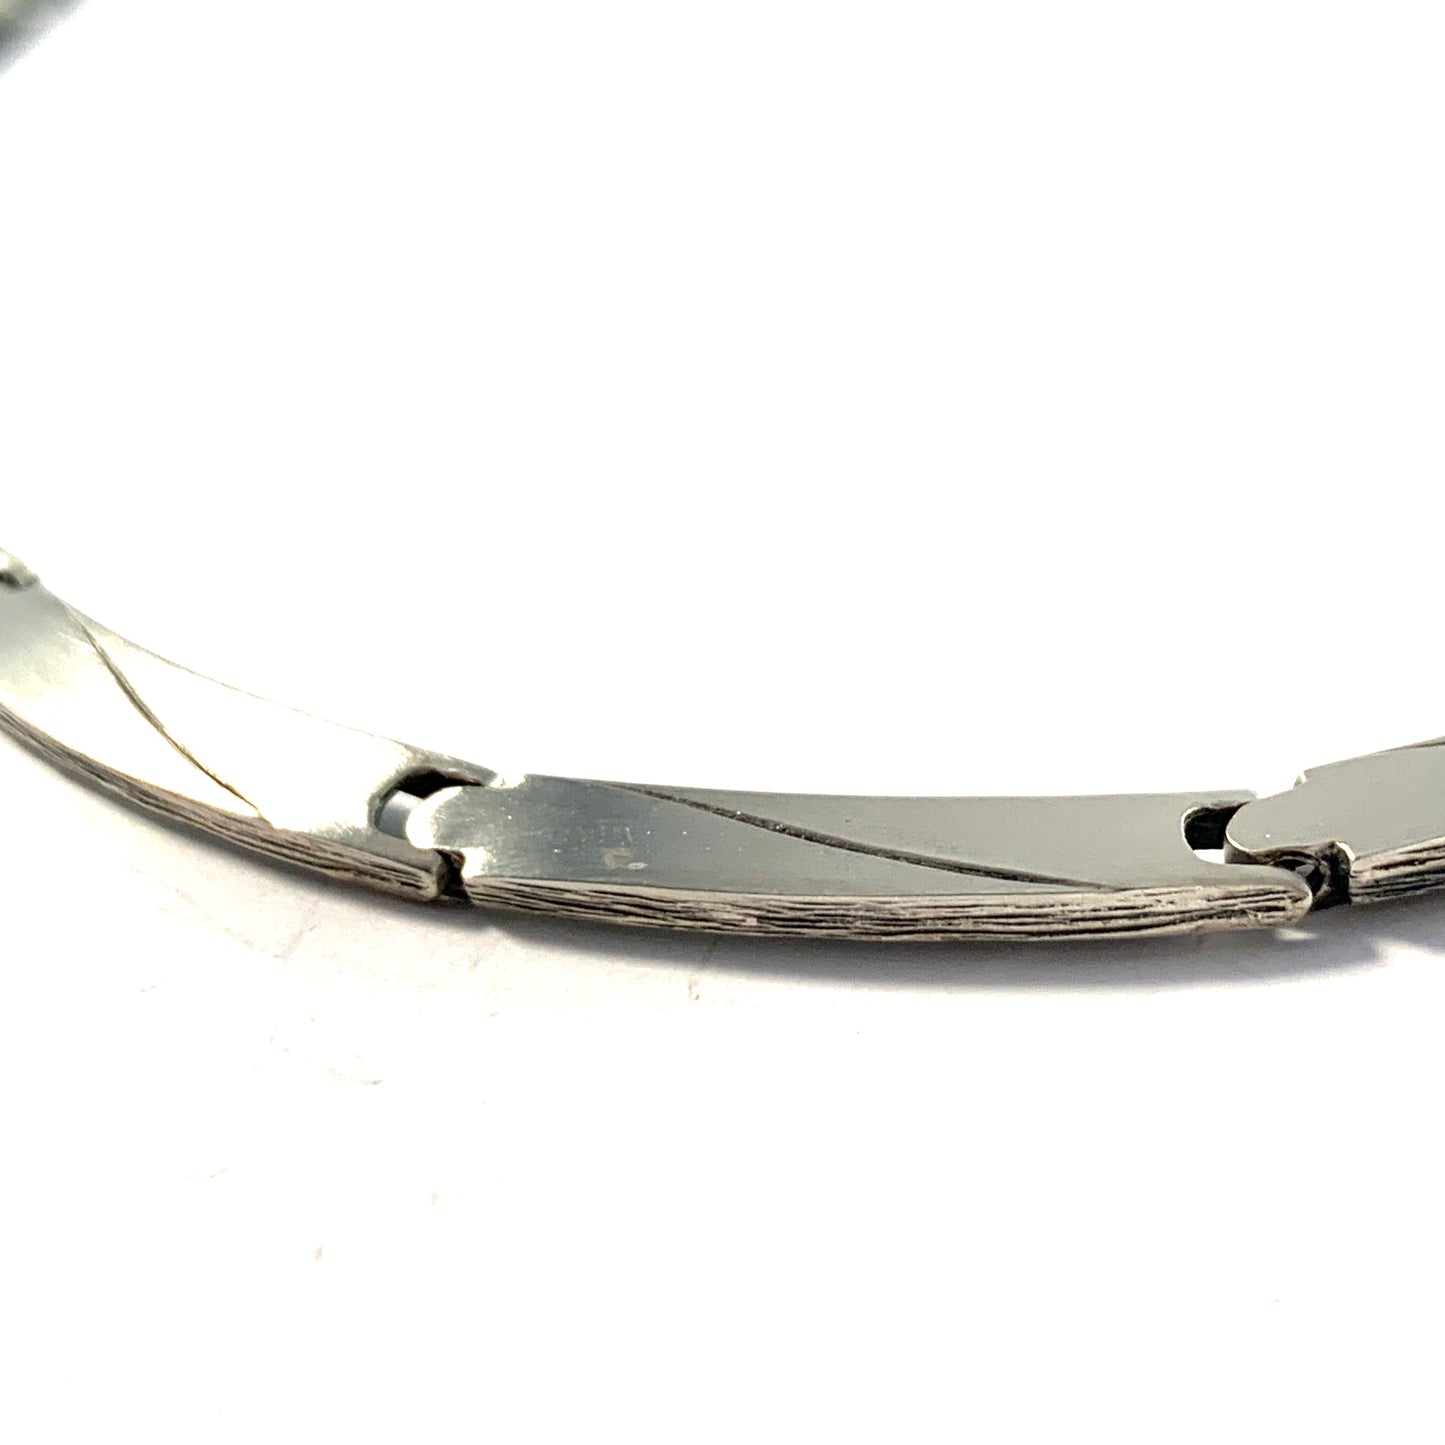 Matti Hyvärinen Finland Vintage Modernist Sterling Silver Link Necklace. Signed